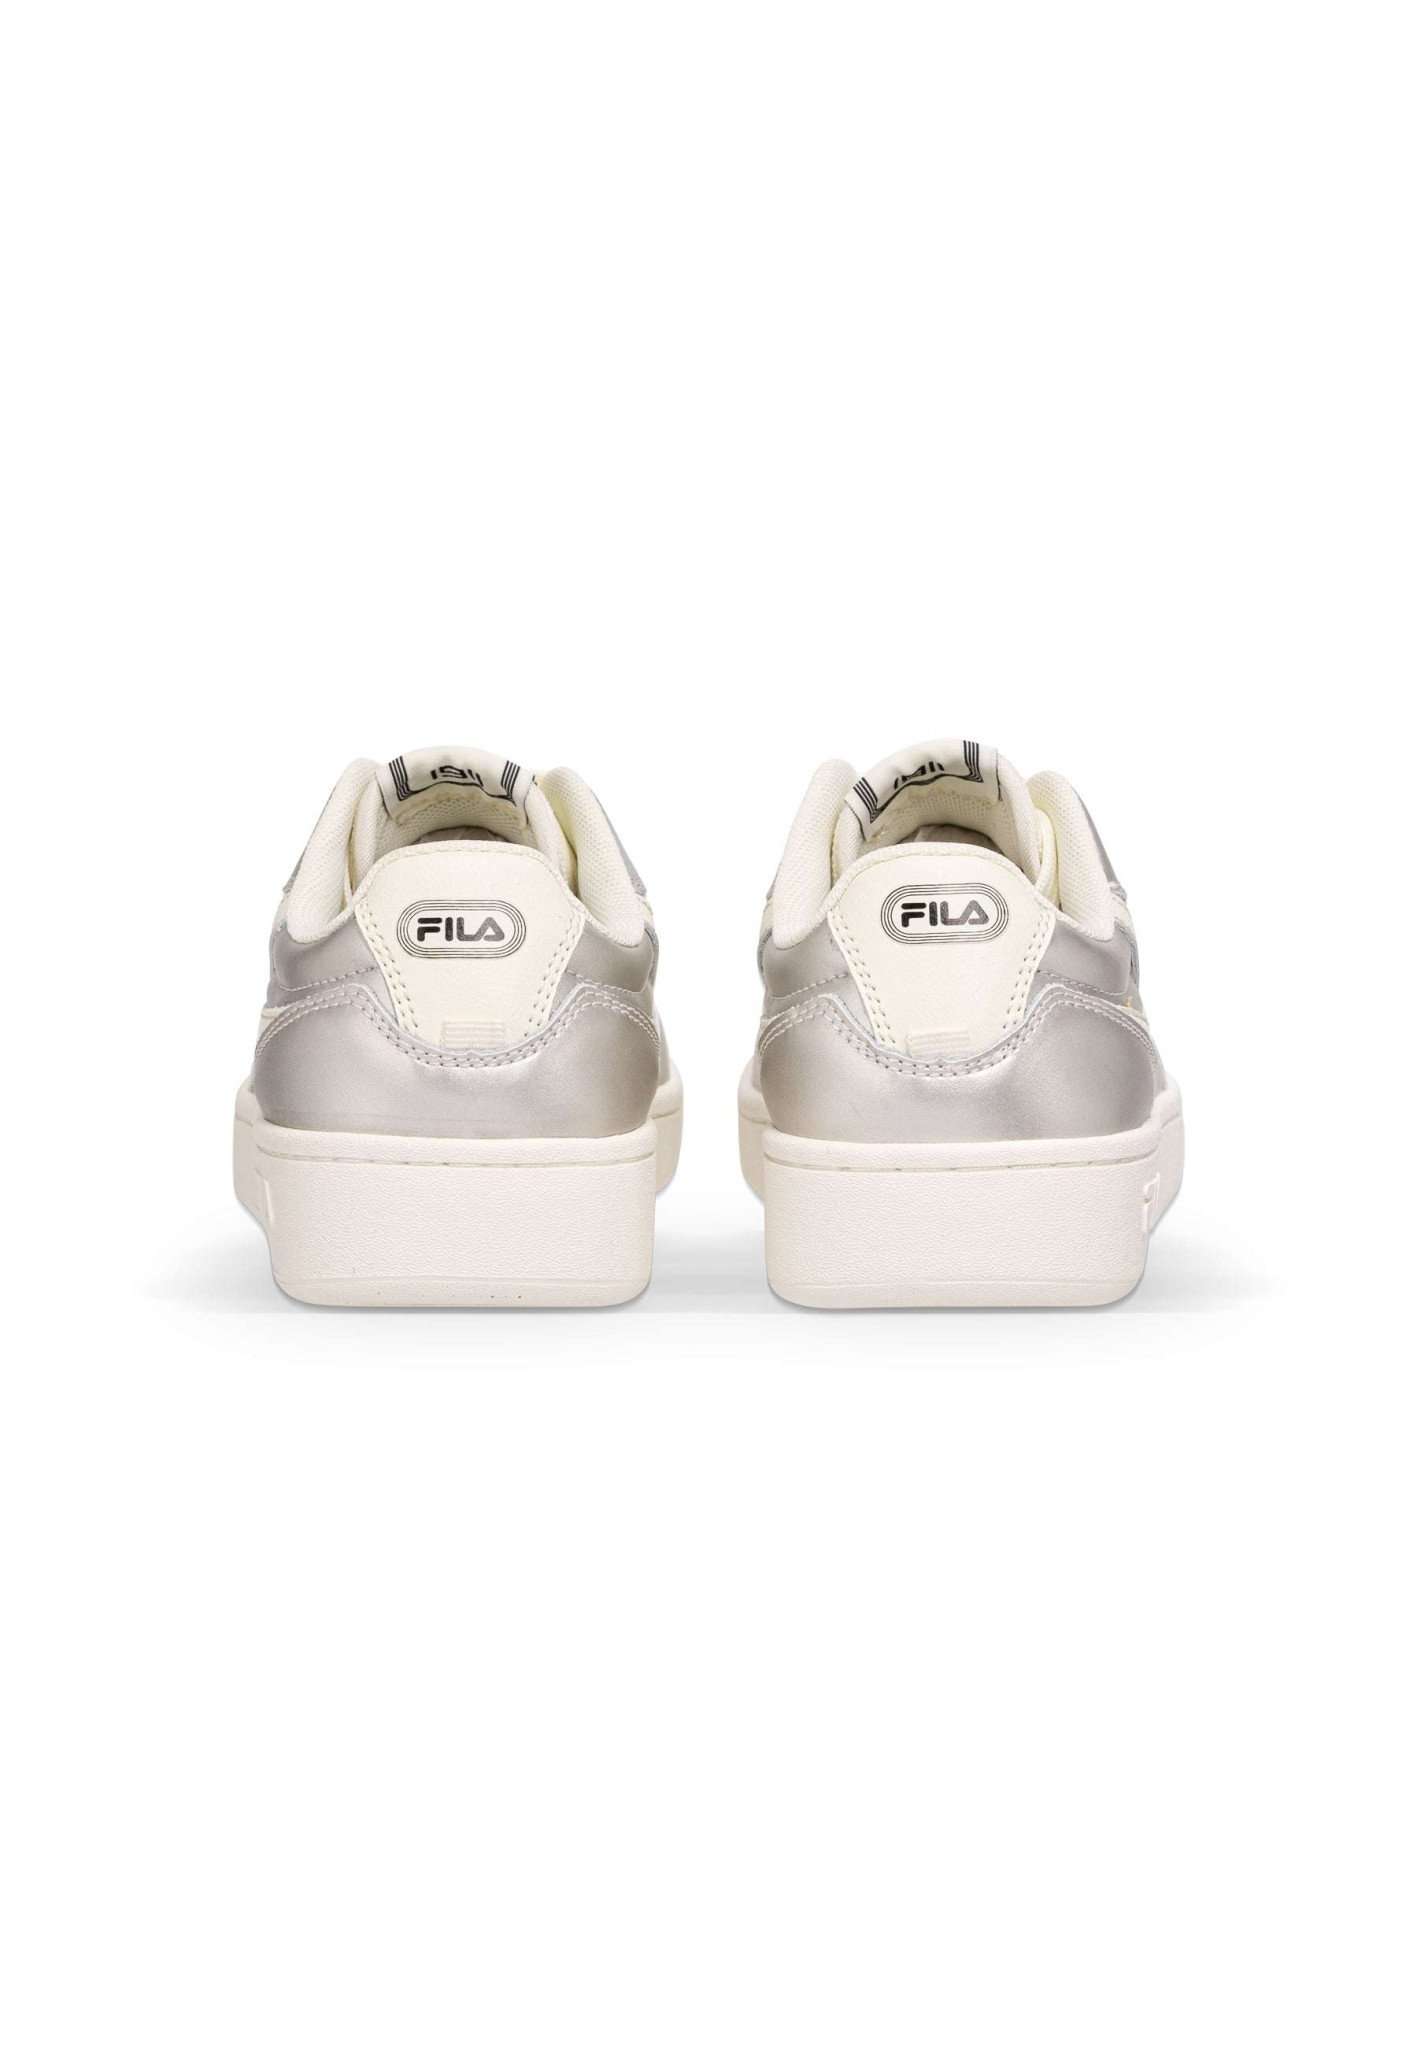 Fila Sevaro F Wm in Silver-Marshmallow Sneakers Fila   